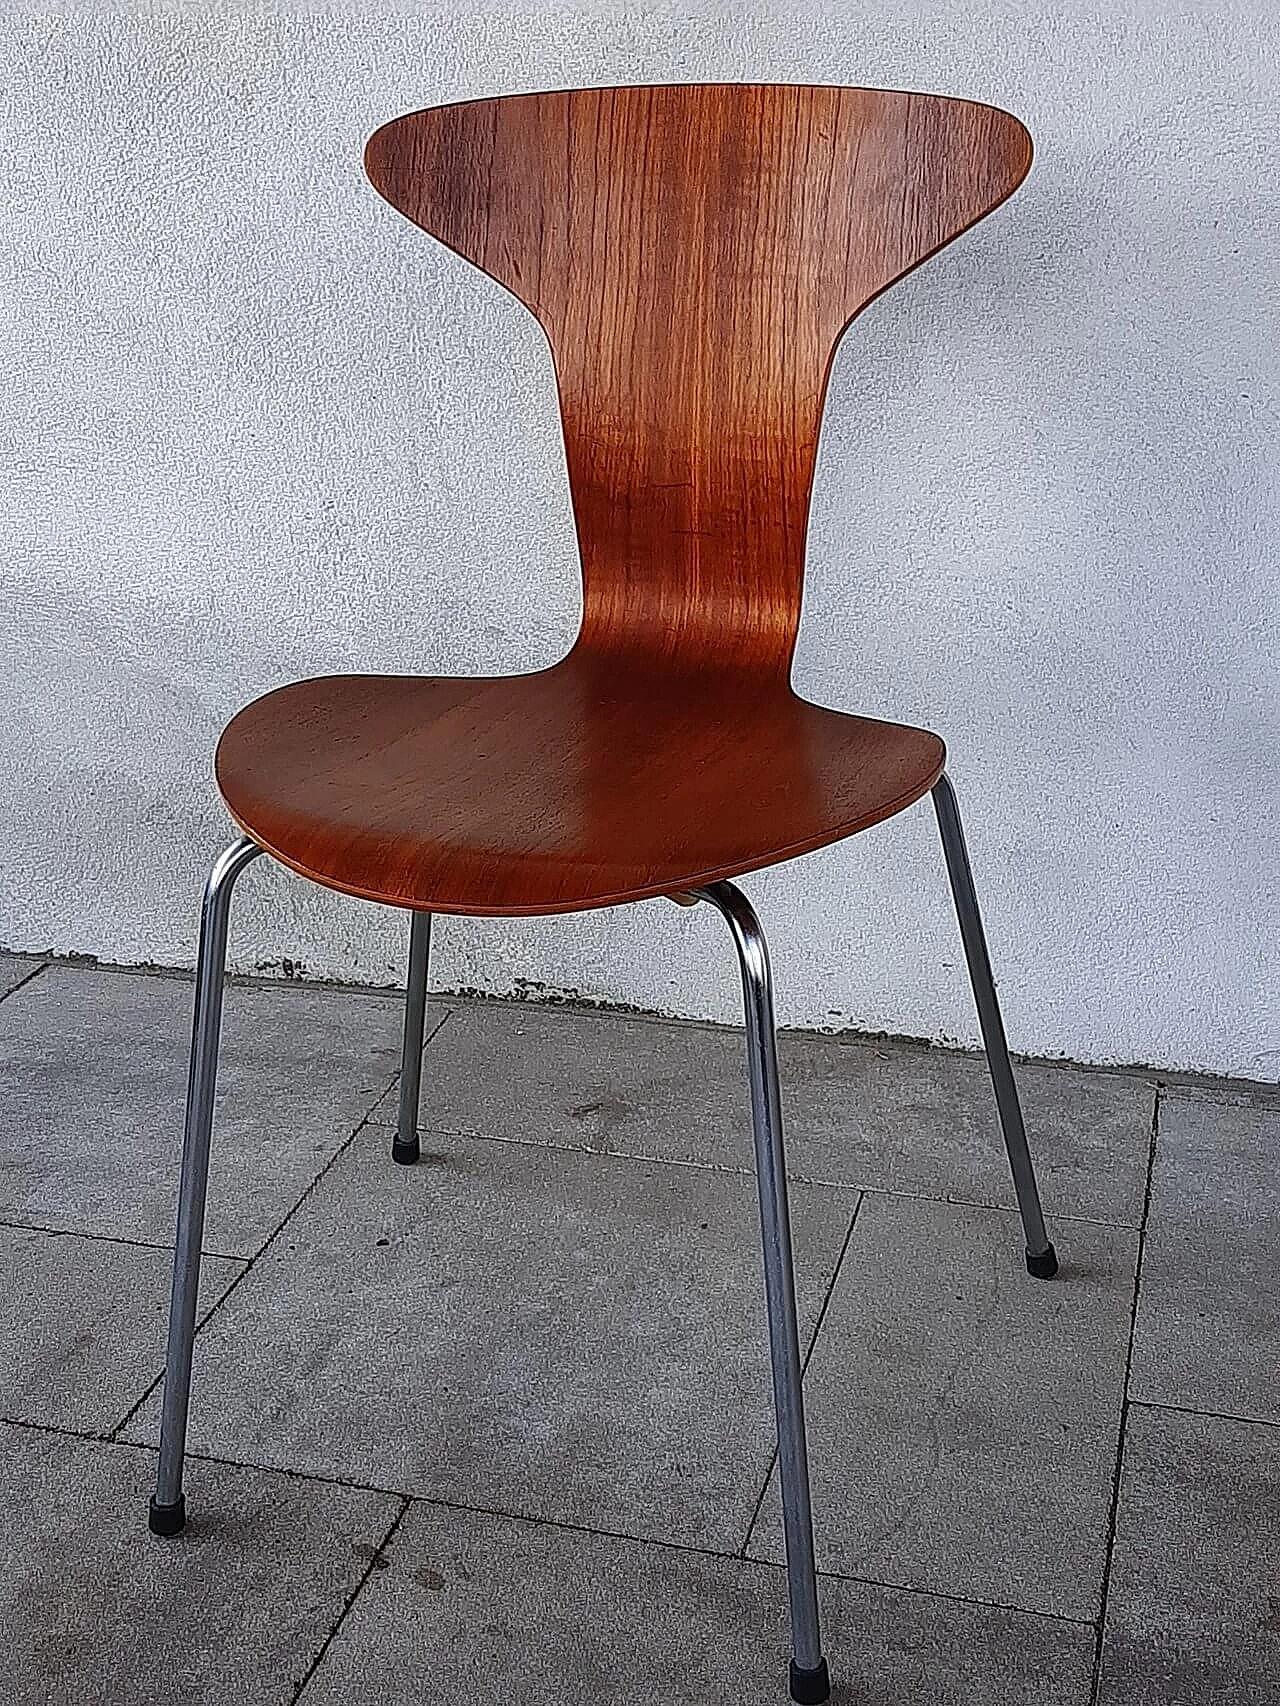 6 Chairs 3105 by Arne Jacobsen for Fritz Hansen, 1967 1